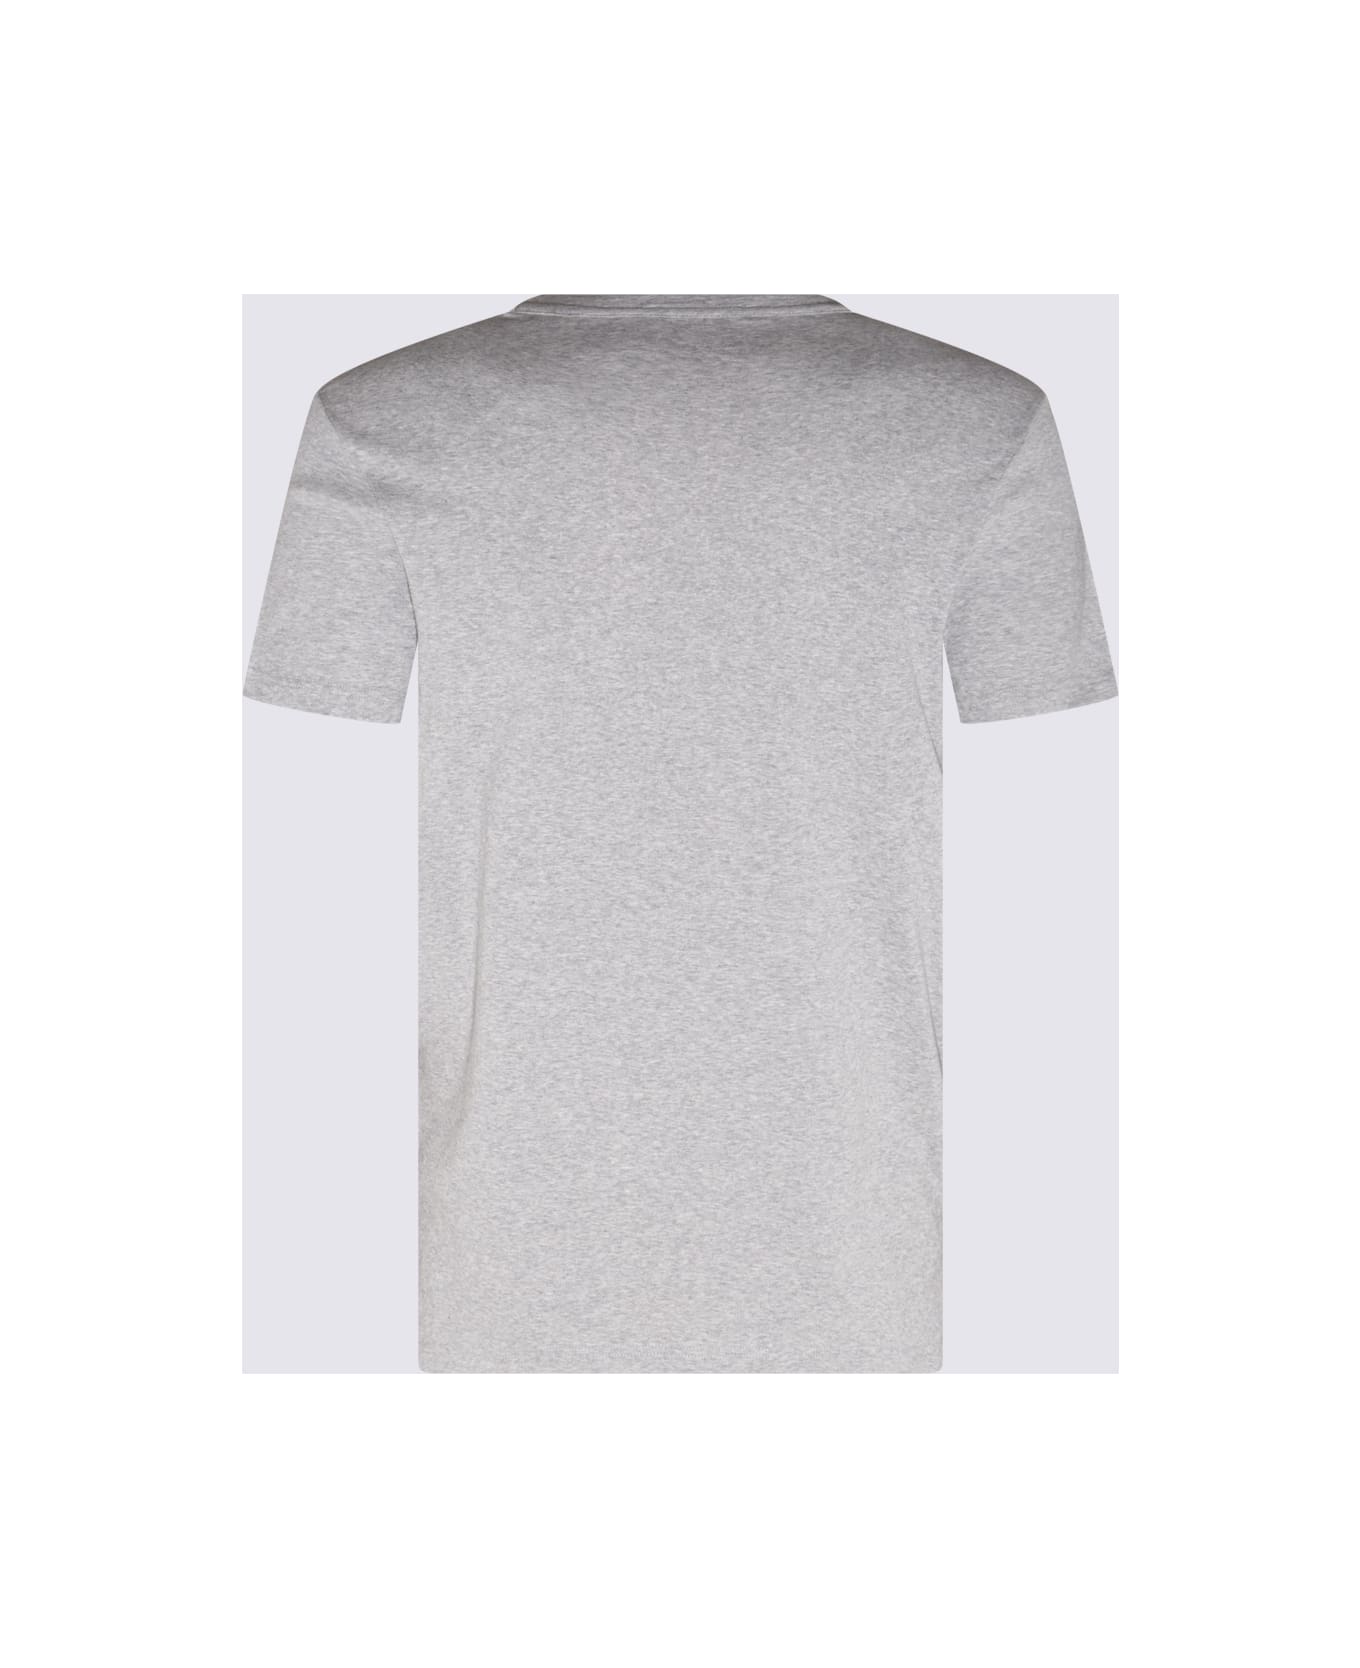 Tom Ford Grey Cotton T-shirt - Grey